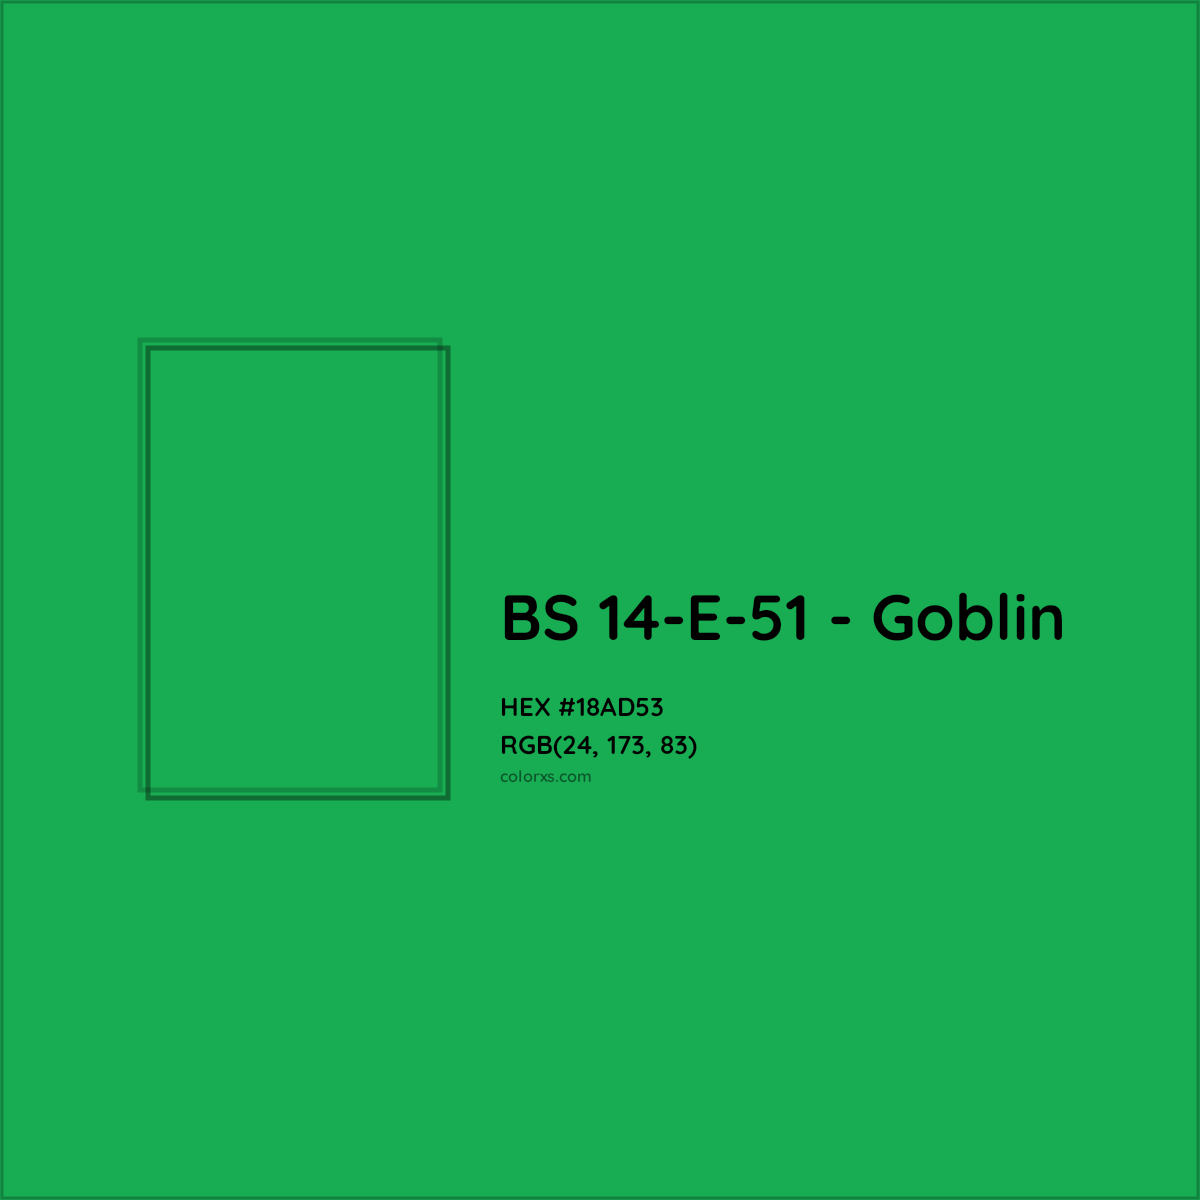 HEX #18AD53 BS 14-E-51 - Goblin CMS British Standard 4800 - Color Code